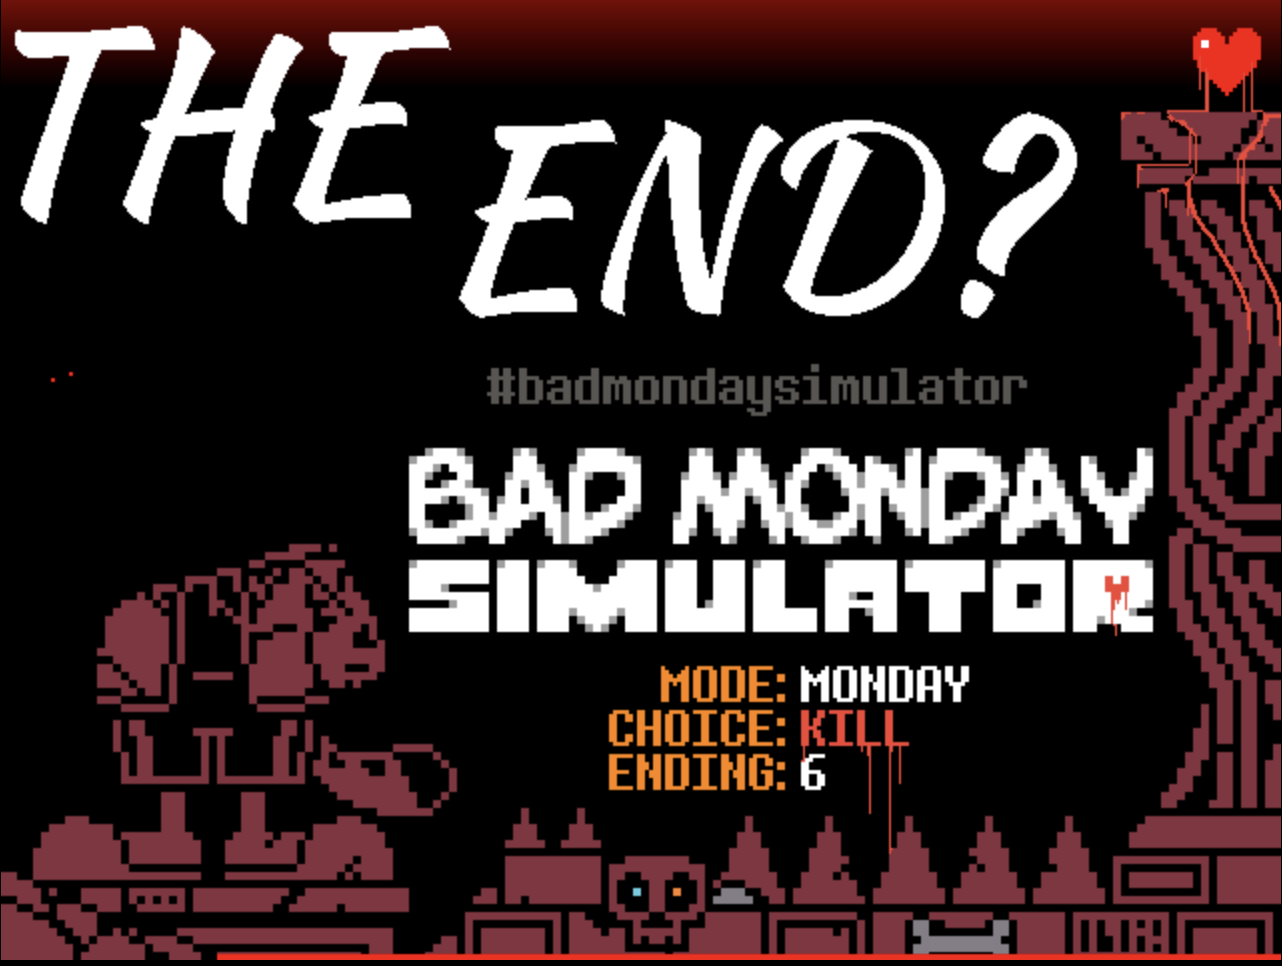 Bad Monday Simulator (2022) - MobyGames